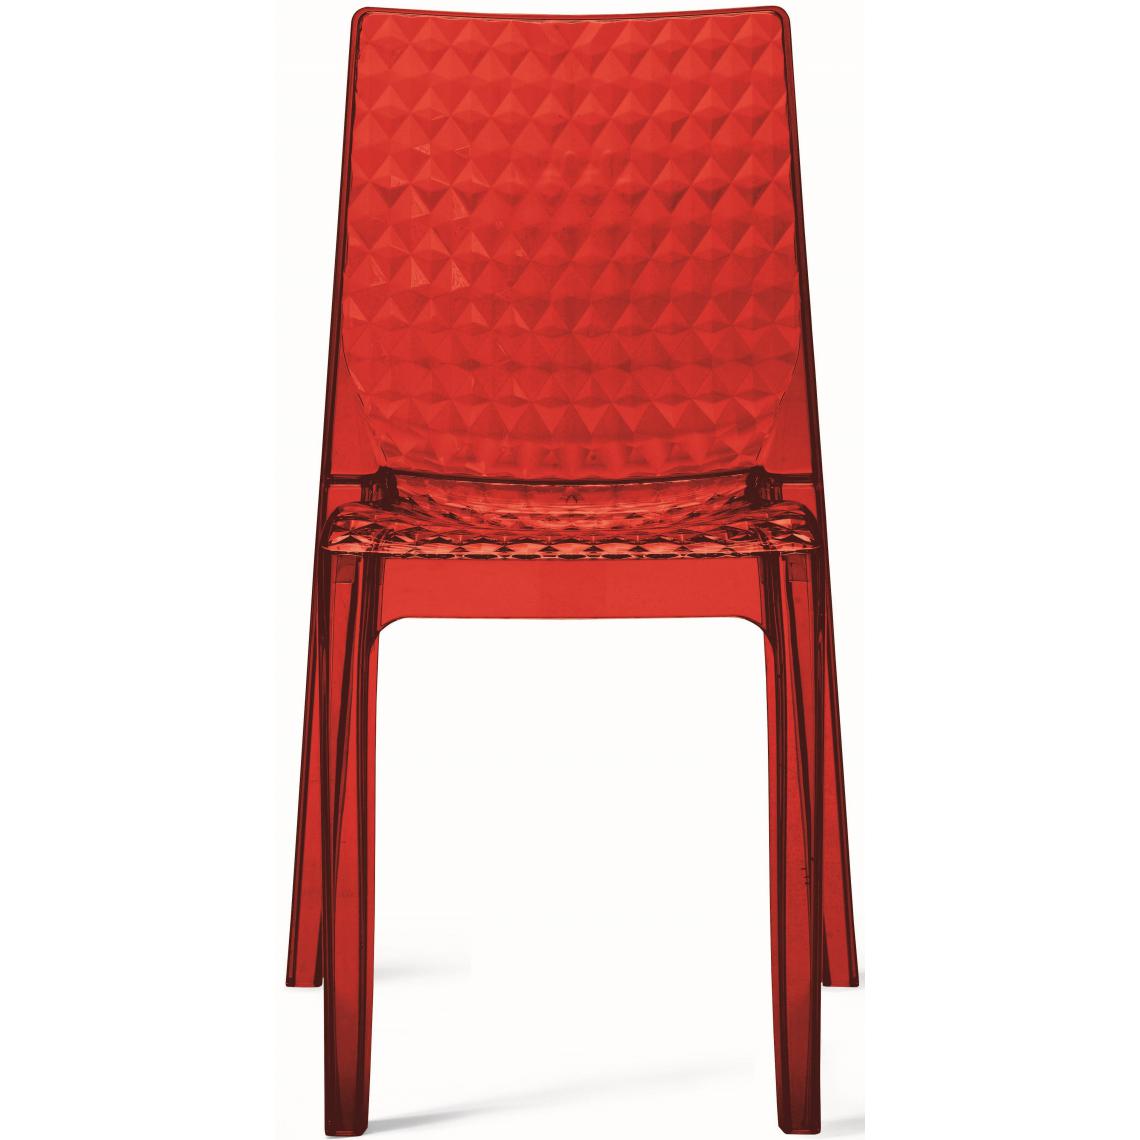 3S. x Home - Chaise Design Transparente Rouge DELPHES - Chaises